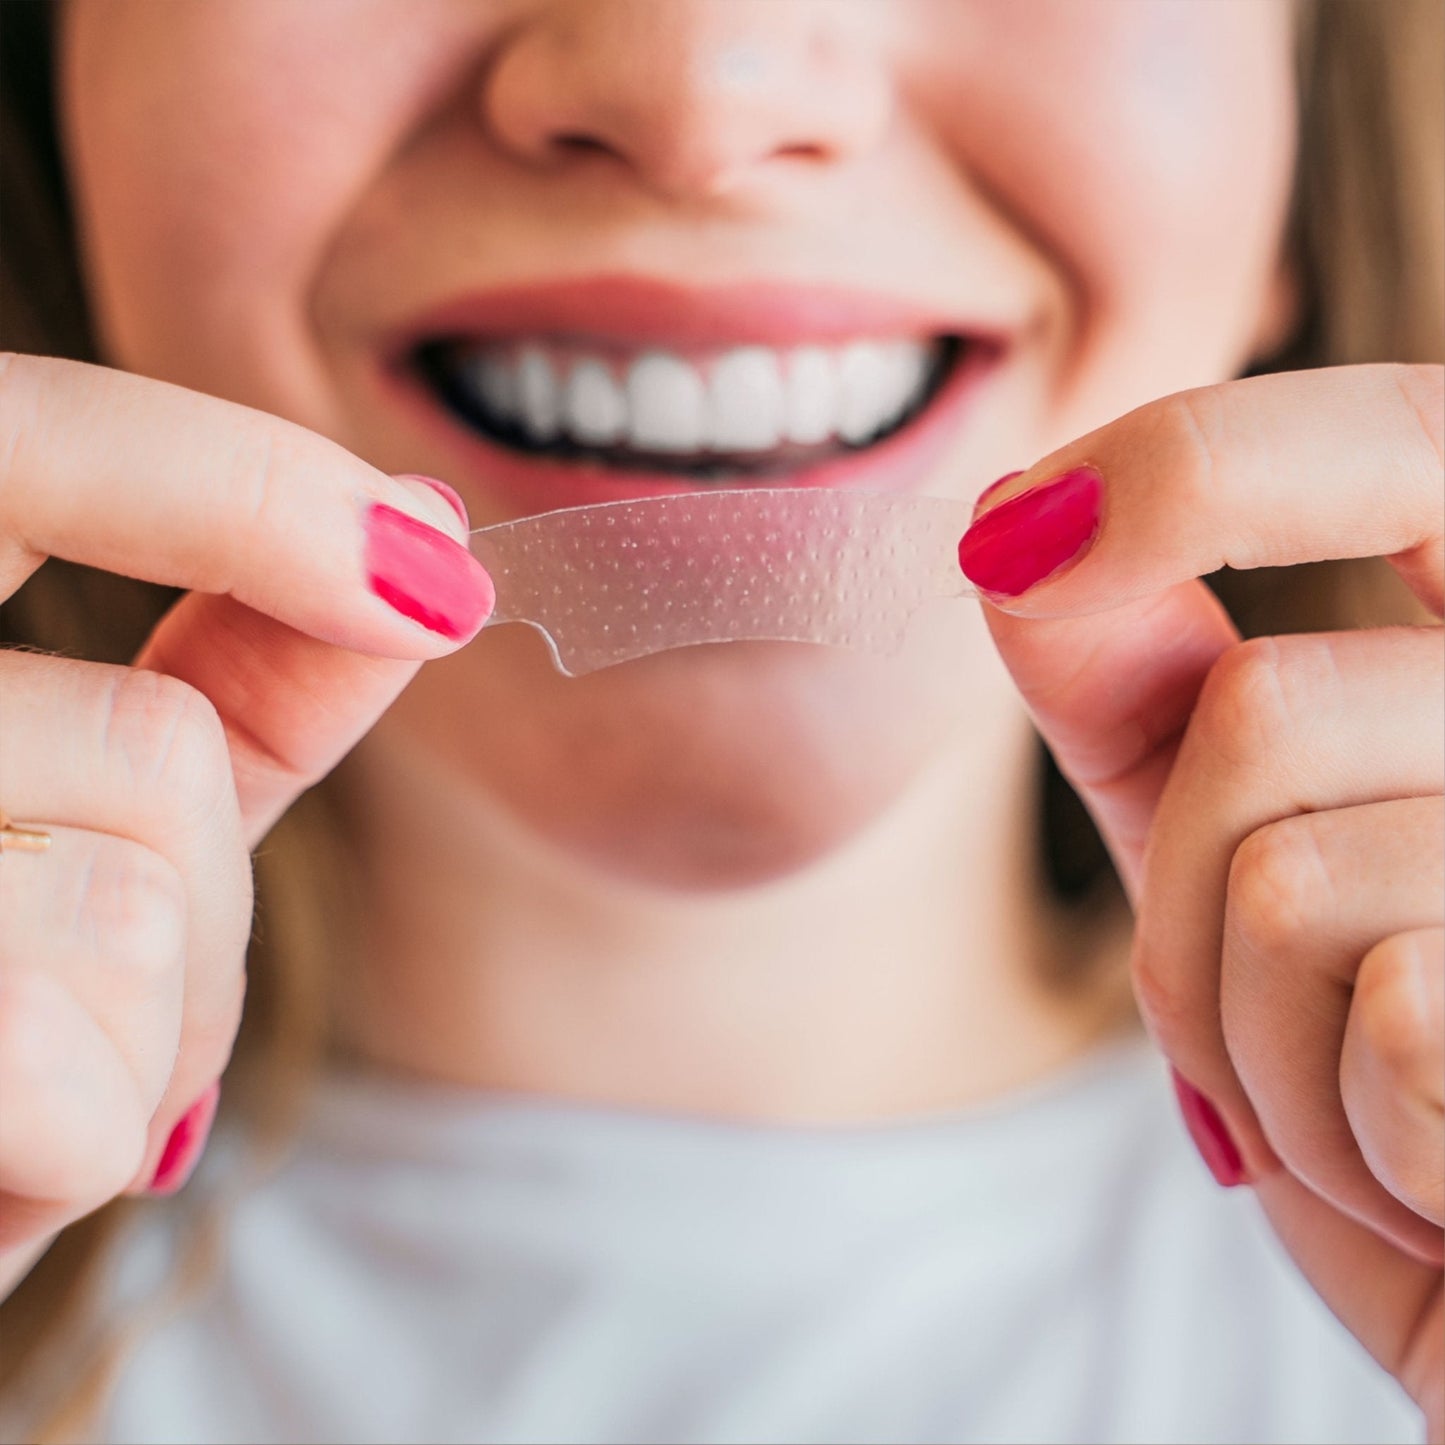 Teeth whitening strips - 2 week treatment - My White Secret